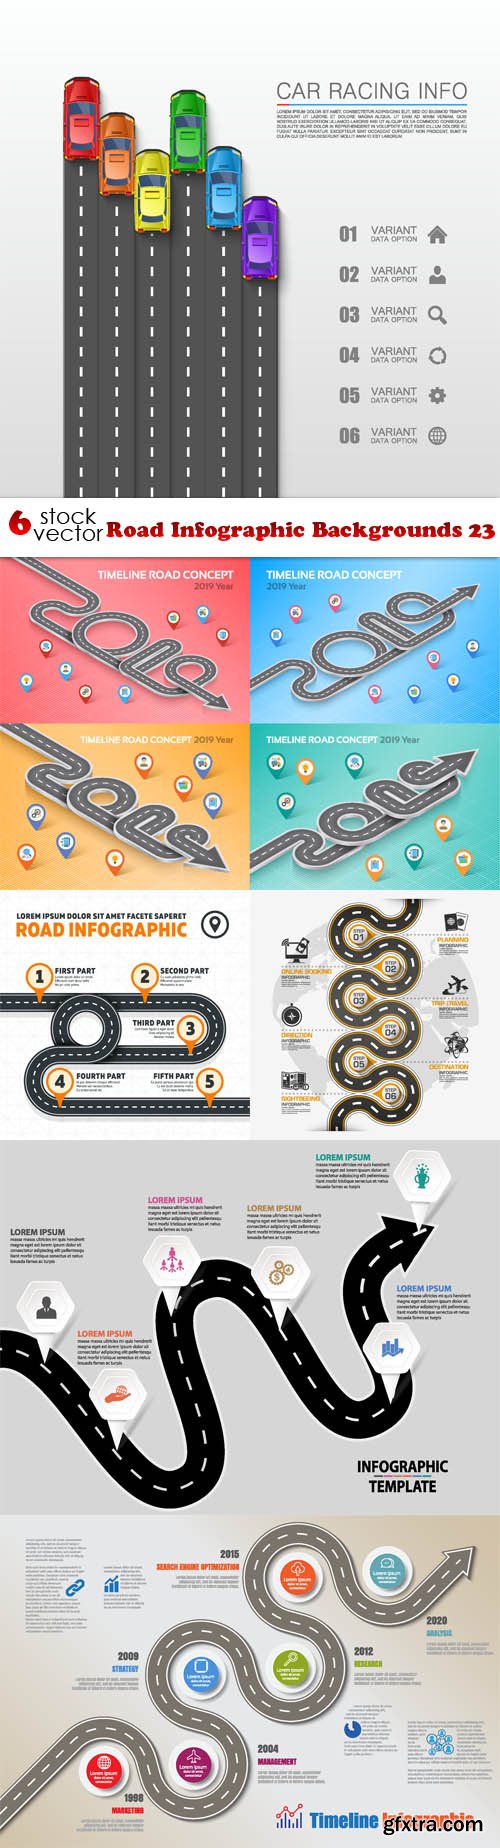 Vectors - Road Infographic Backgrounds 23